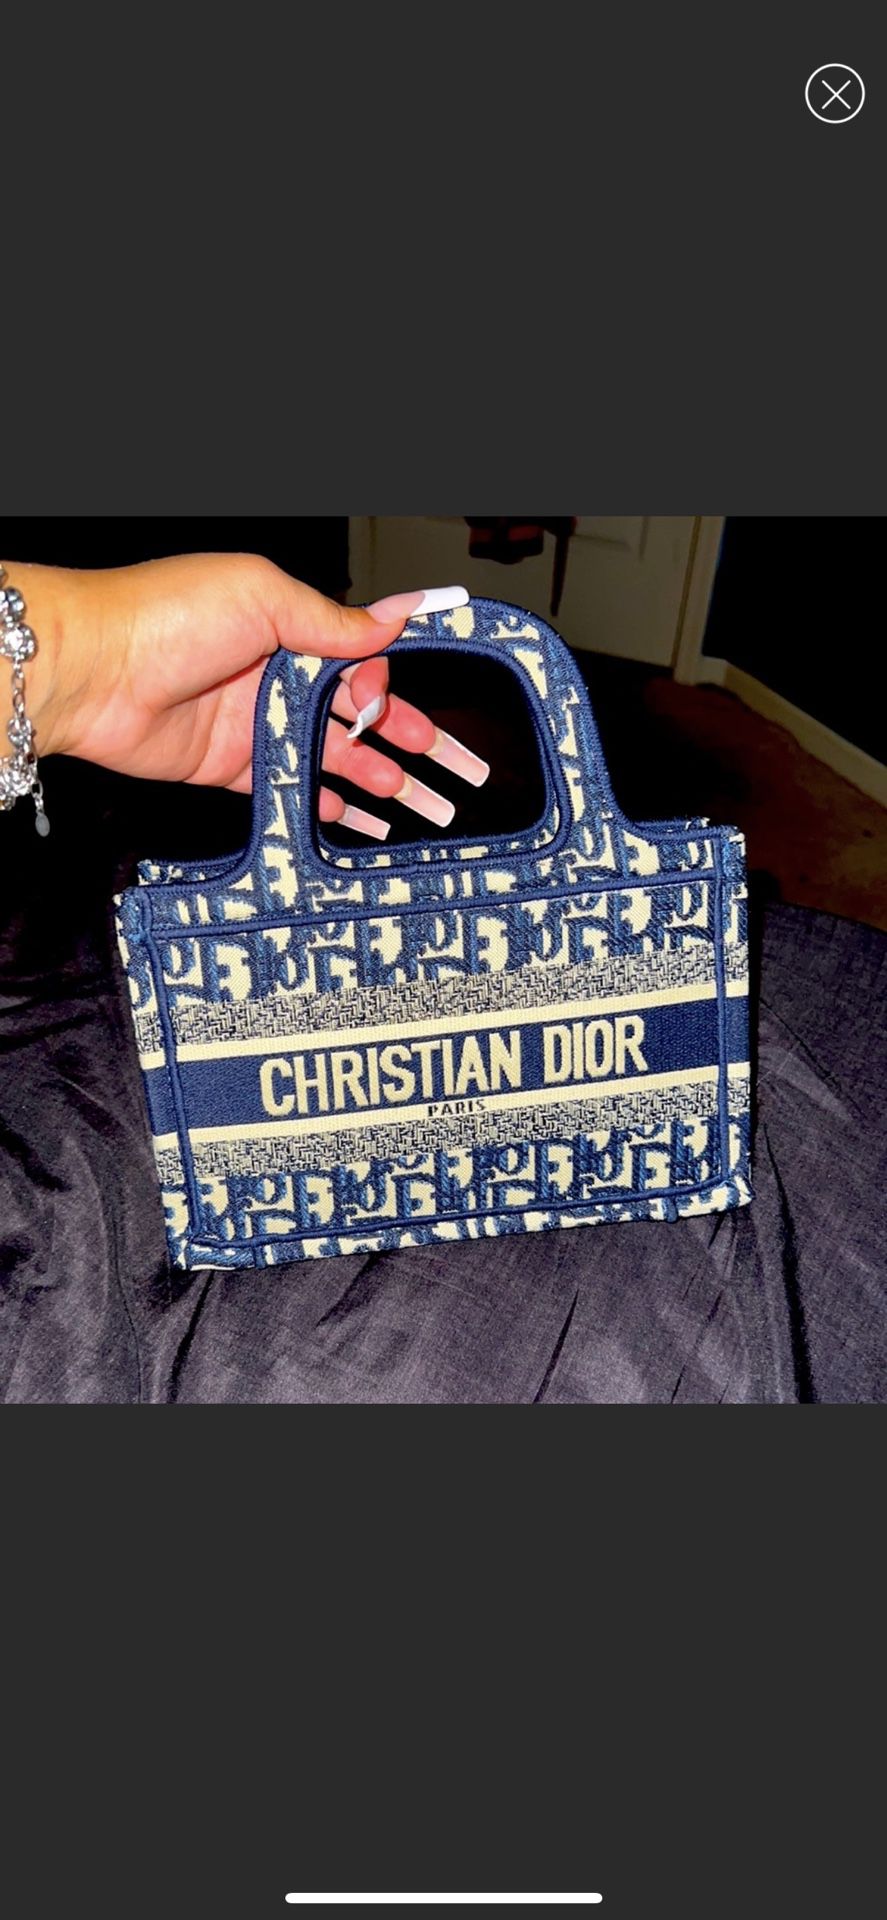 Dior purse